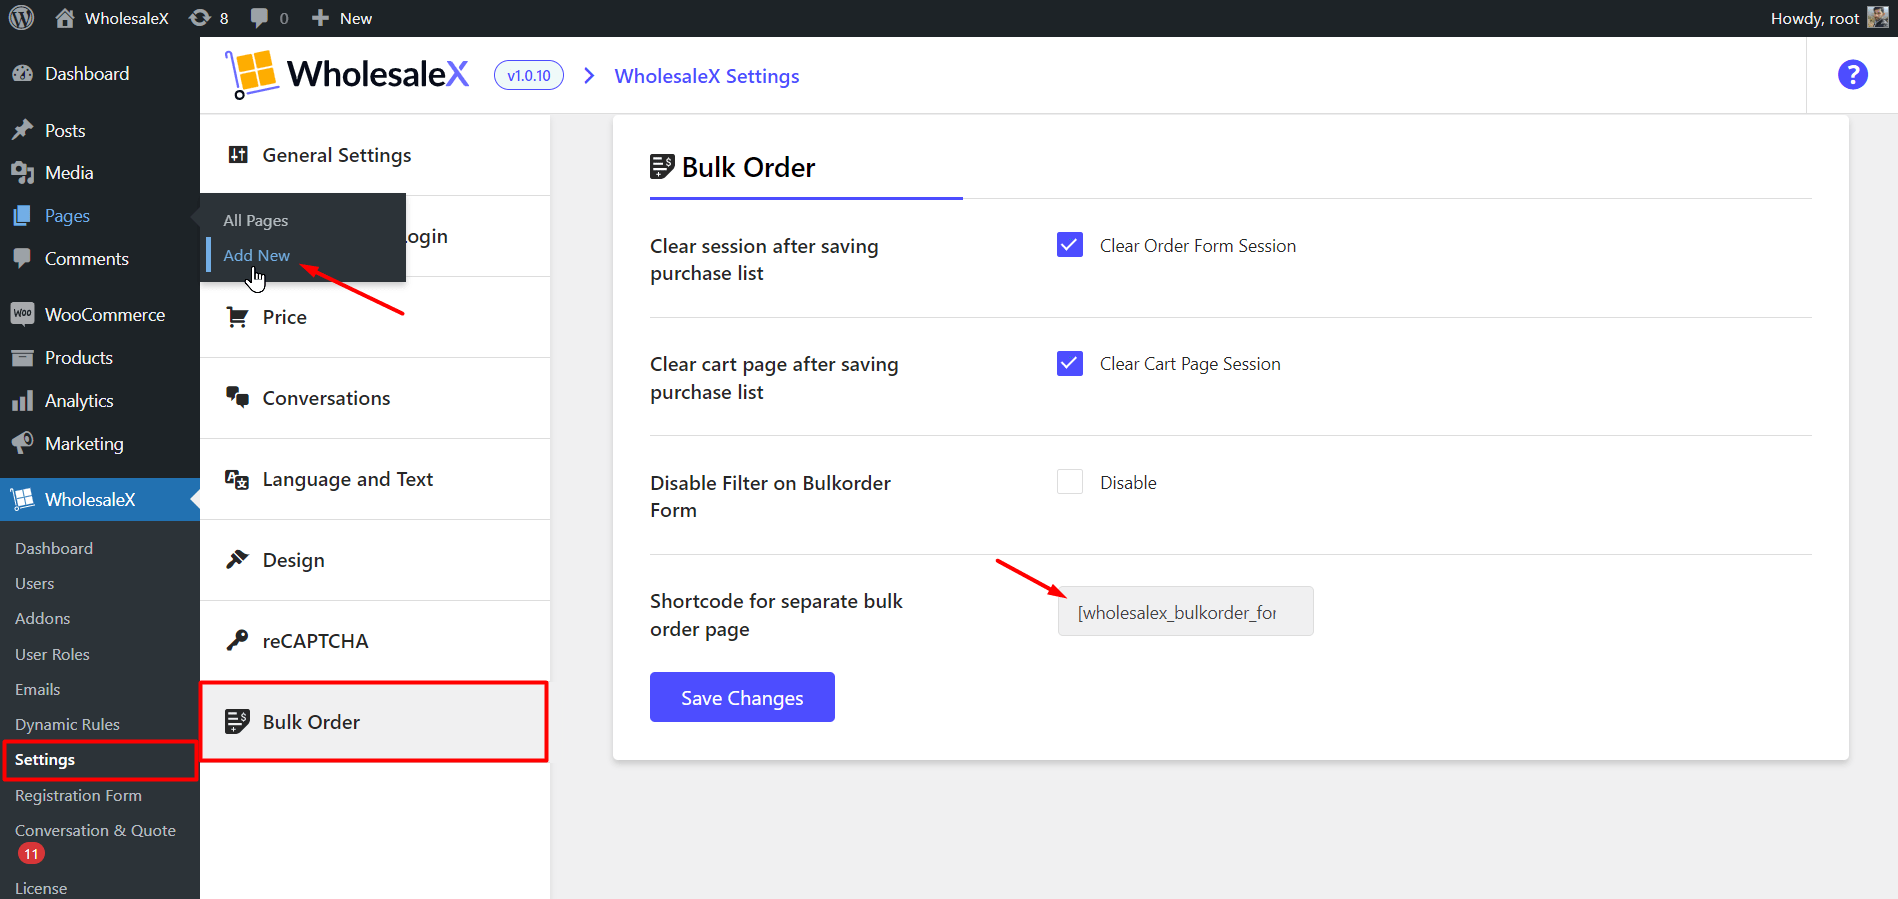 Creating Separate Bulk Order Page